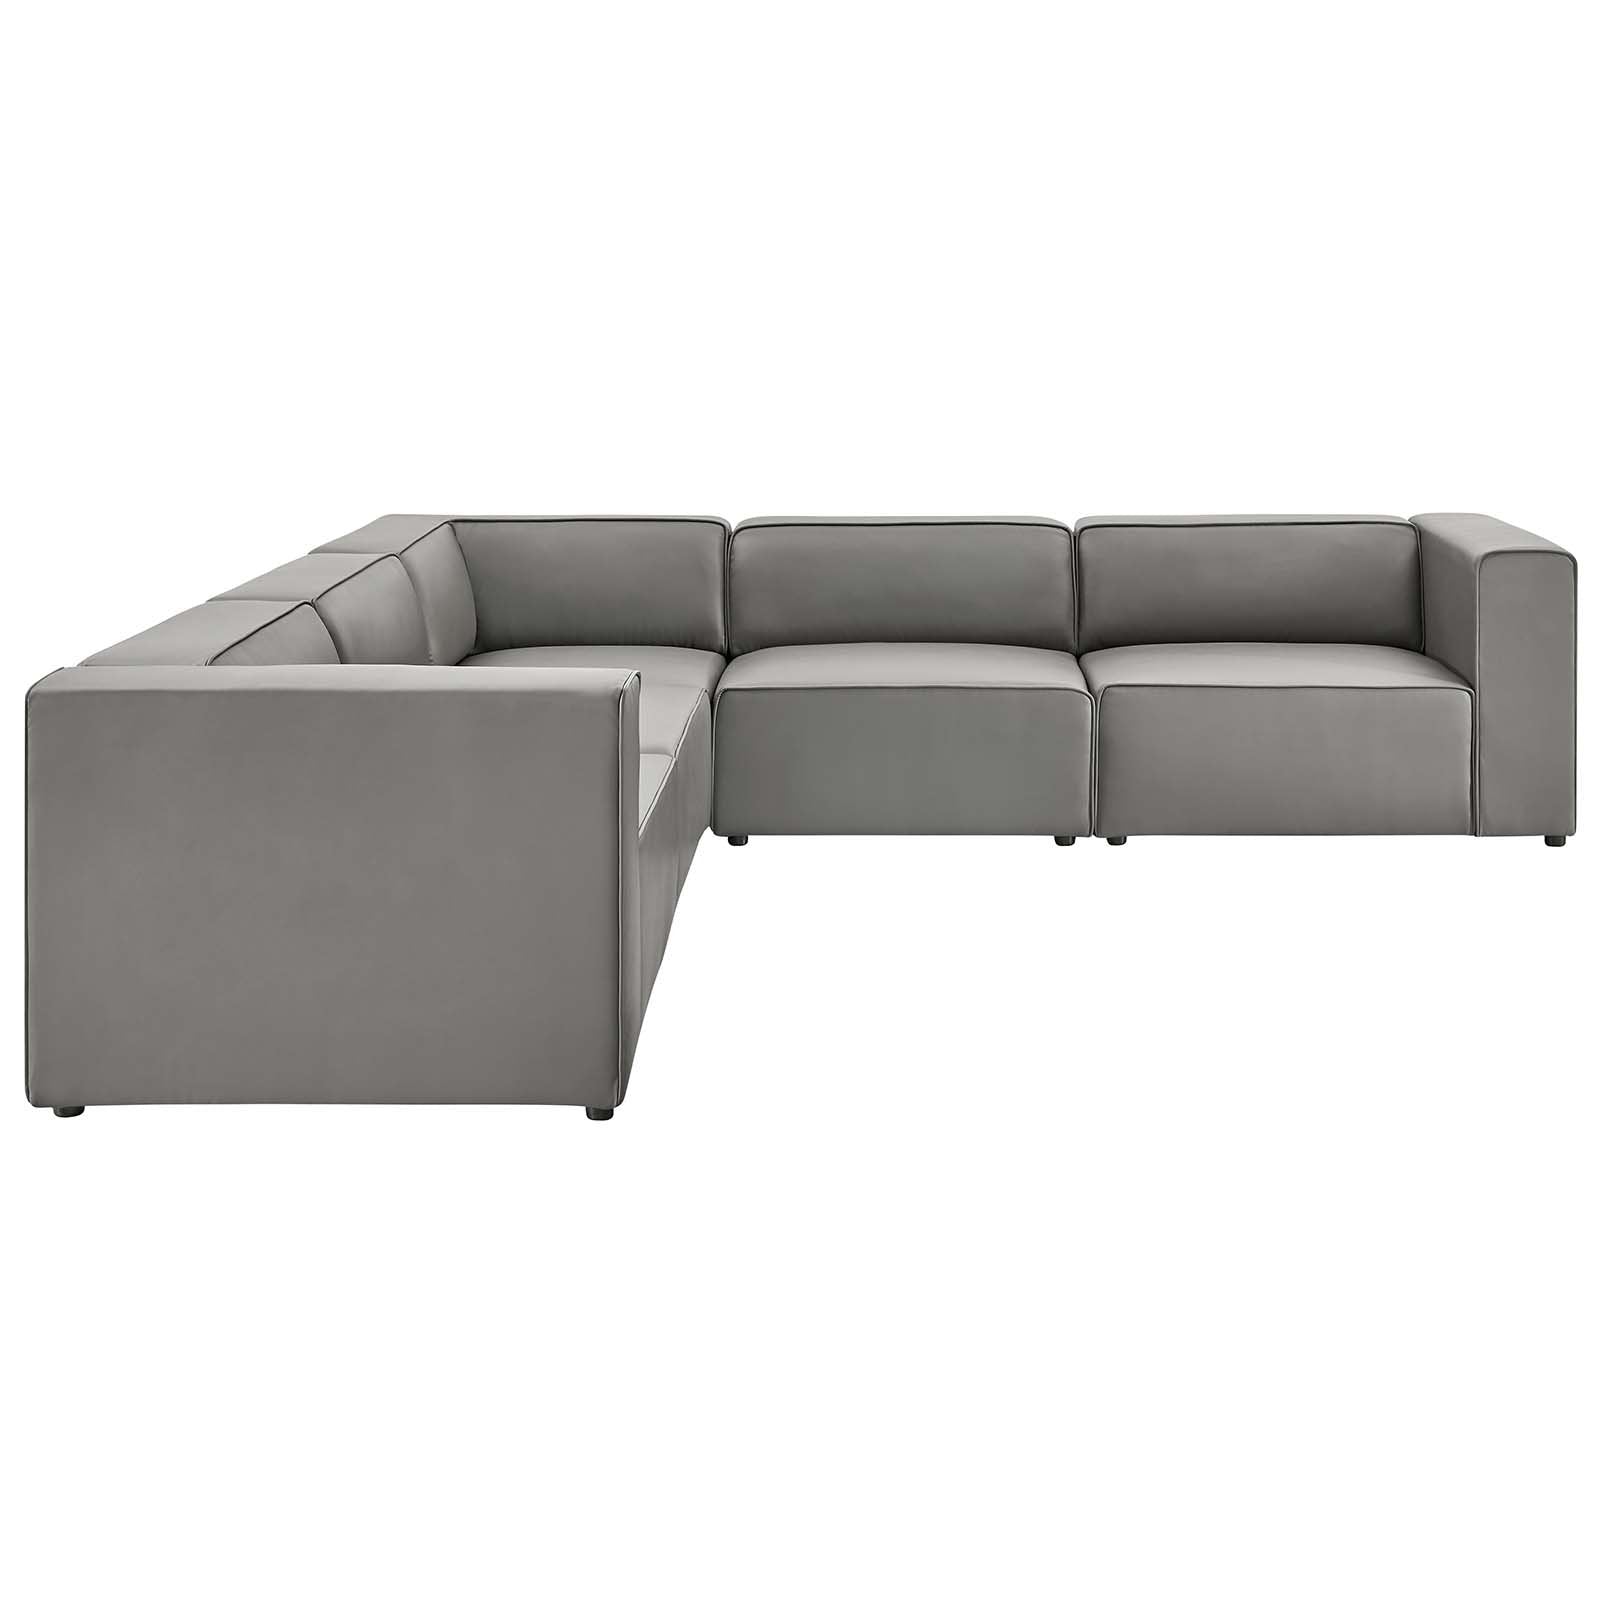 Mingle Vegan Leather 5-Piece Sectional Sofa - East Shore Modern Home Furnishings